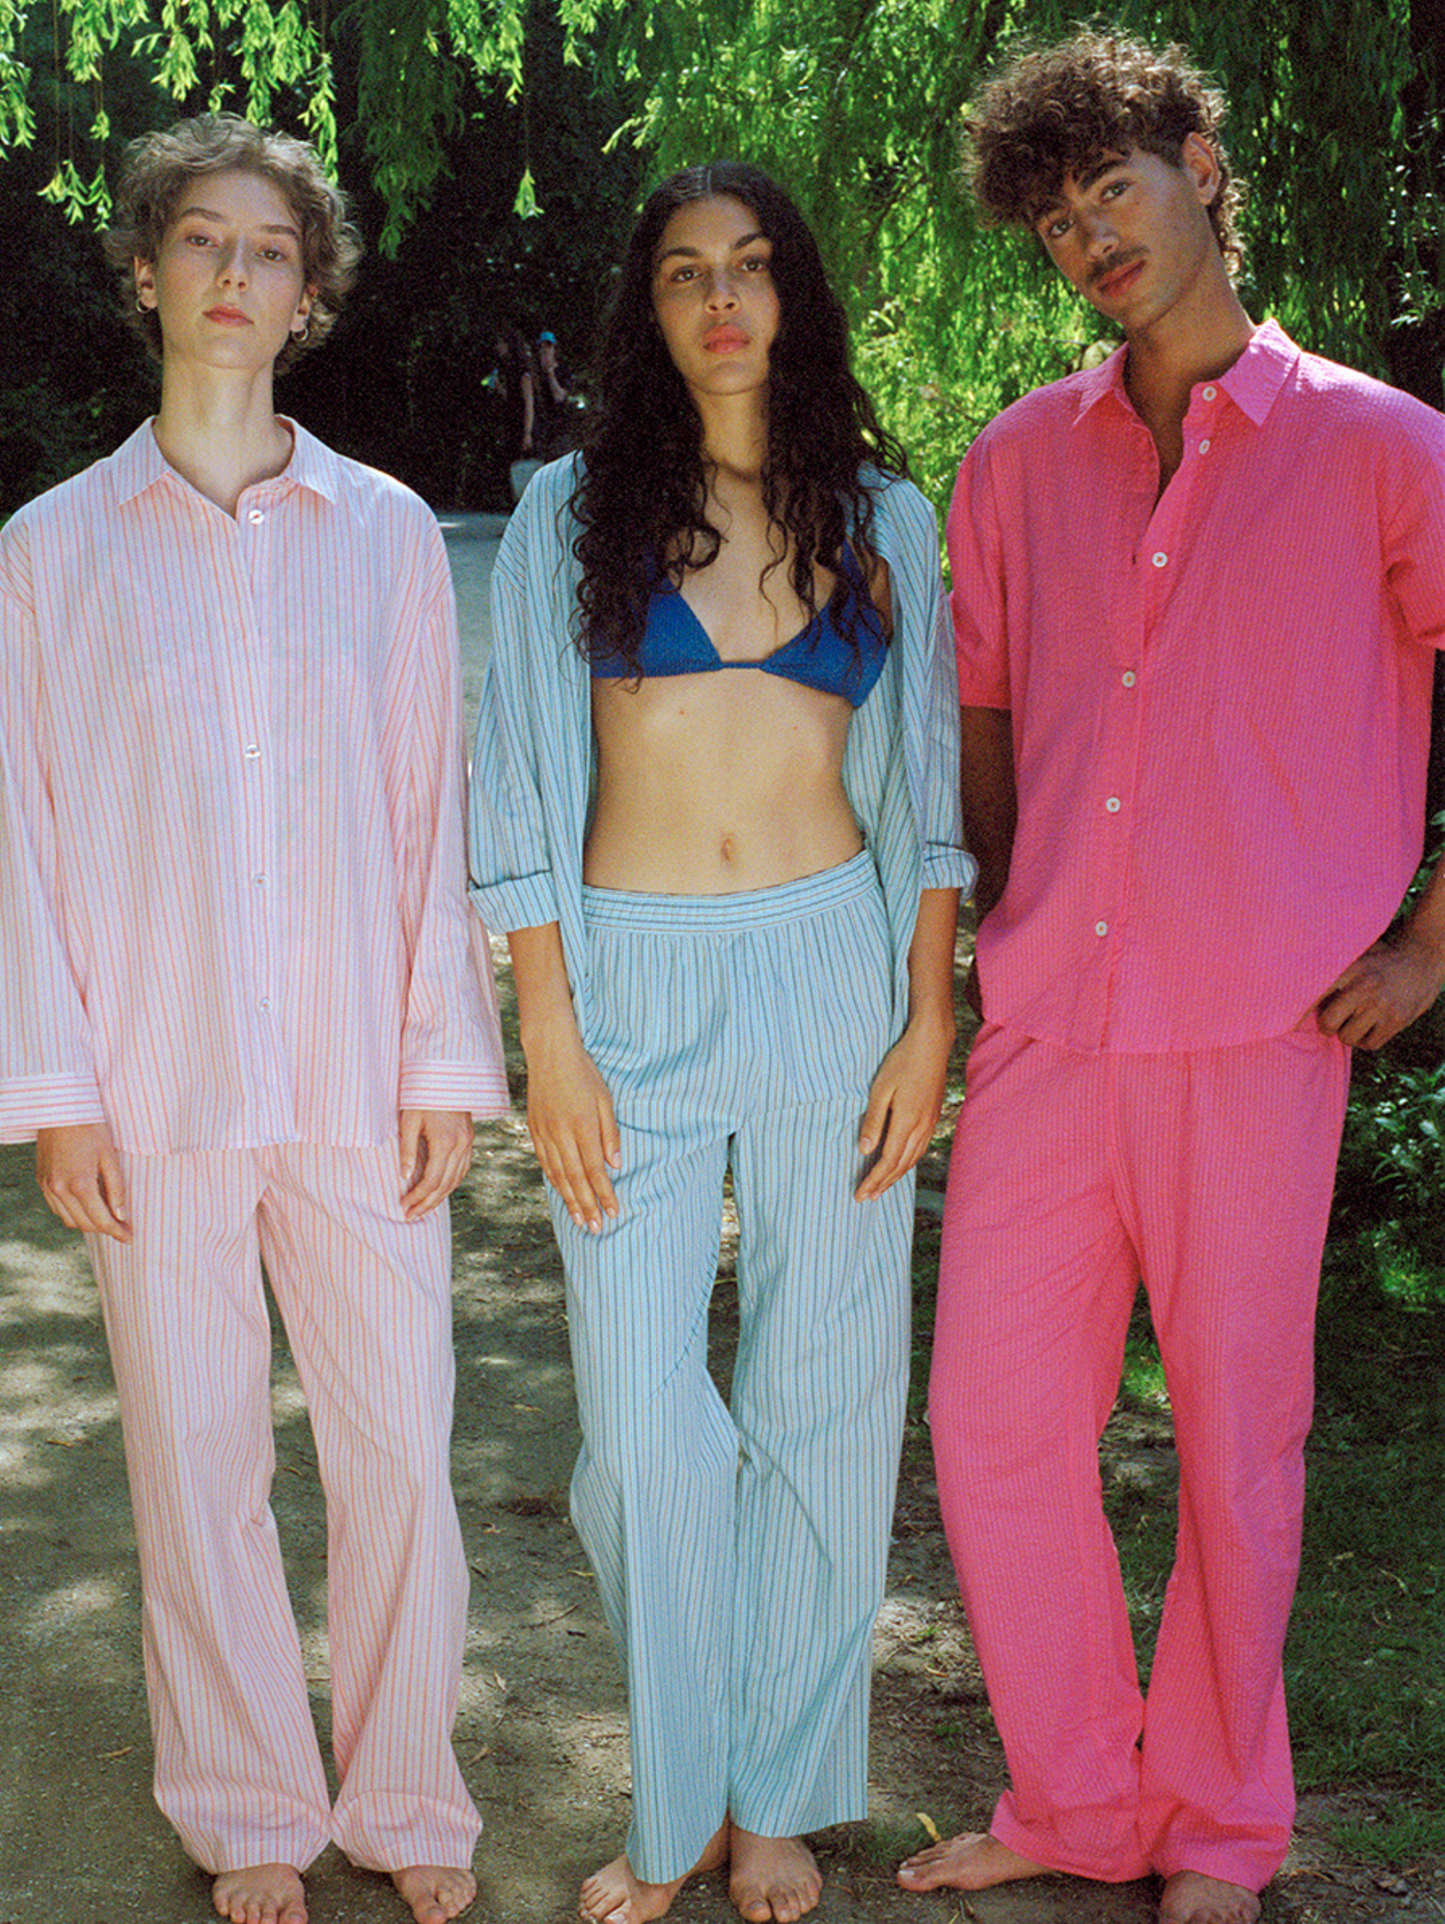 Stripel Pyjamas Set - Blue Sky Clothing   BeckSöndergaard.no